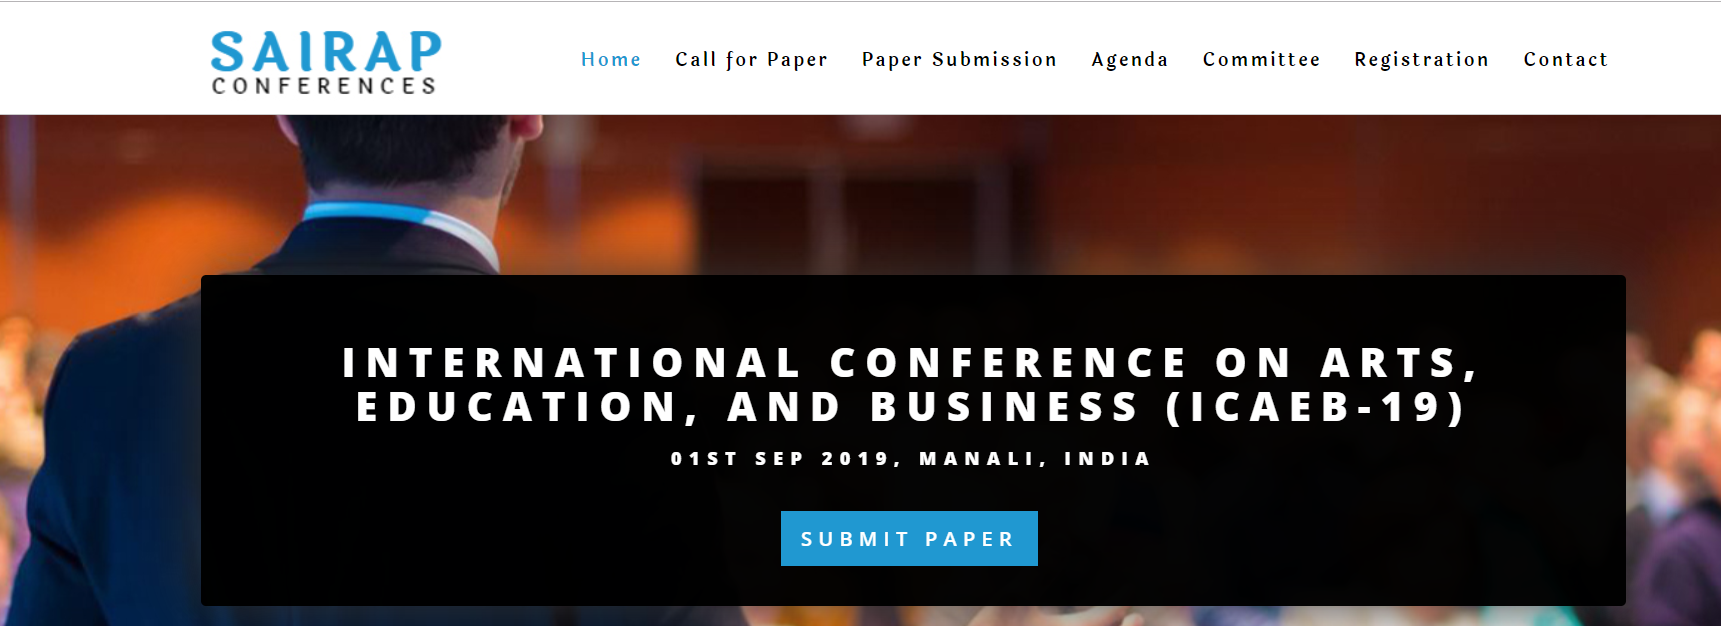 International Conference on Arts ,Education,Business (ICAEB-19), Manali, Himachal Pradesh, India